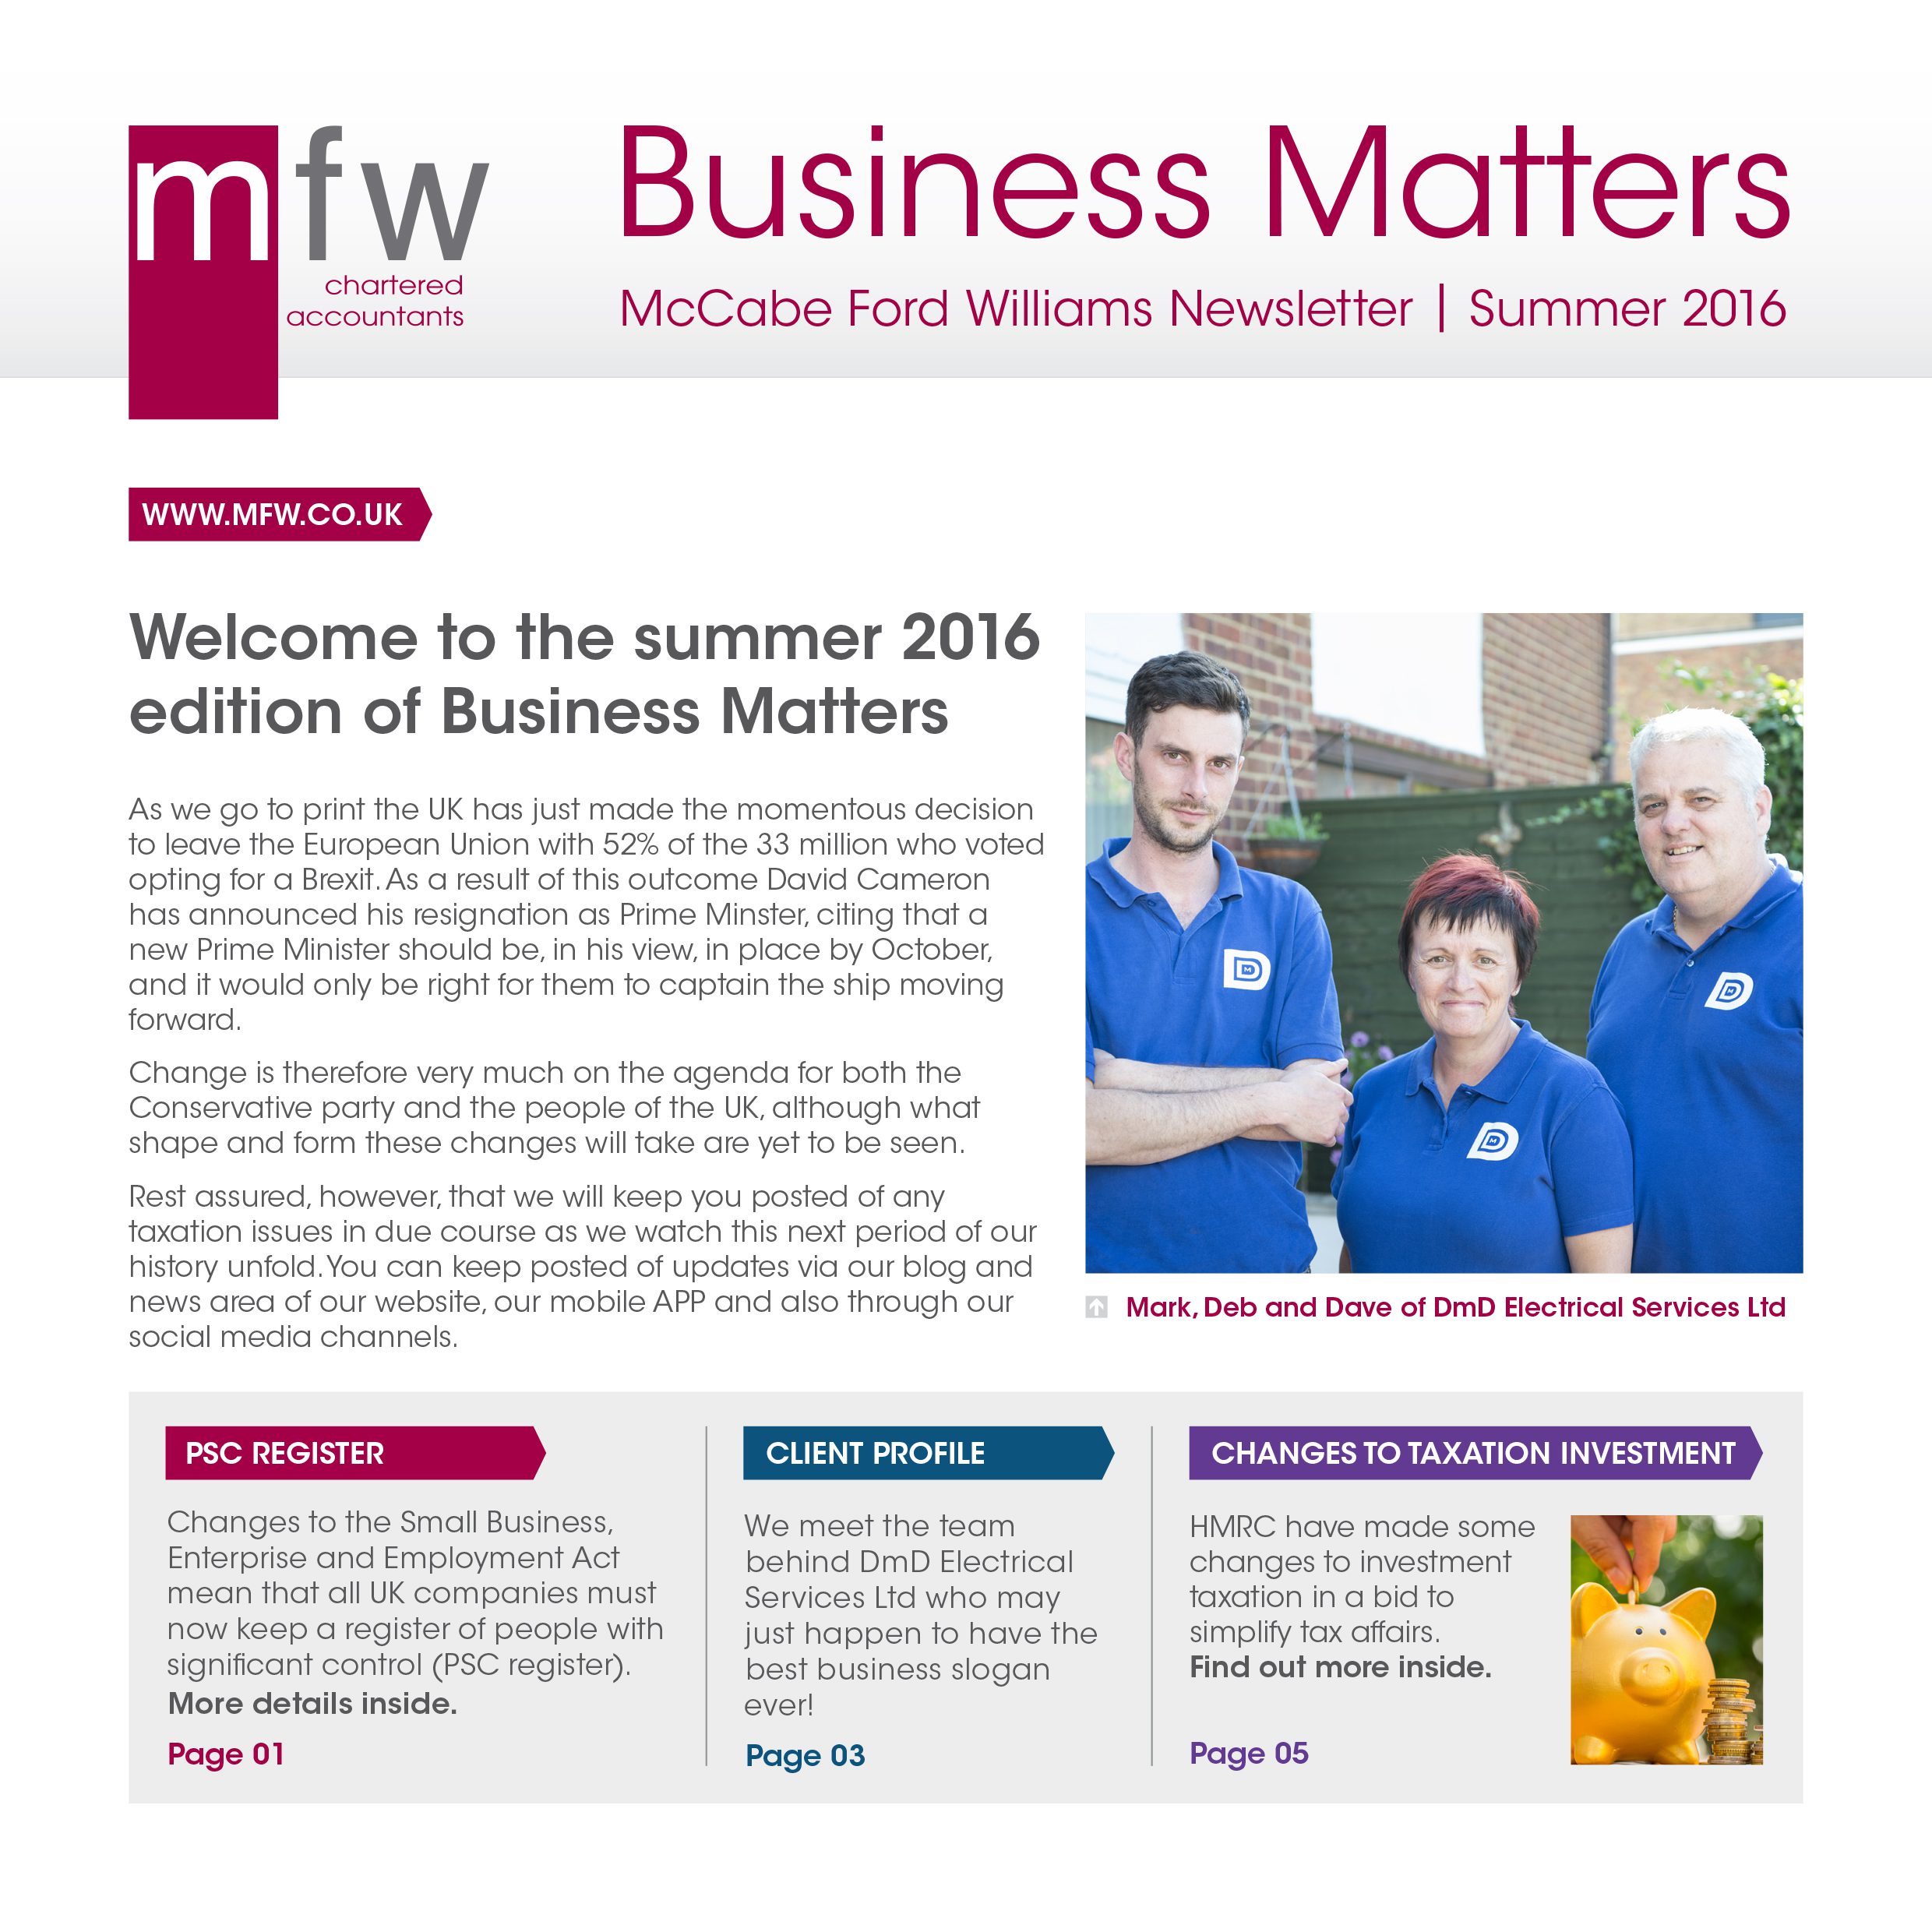 MFW Business Matters newsletter summer 2016 edition